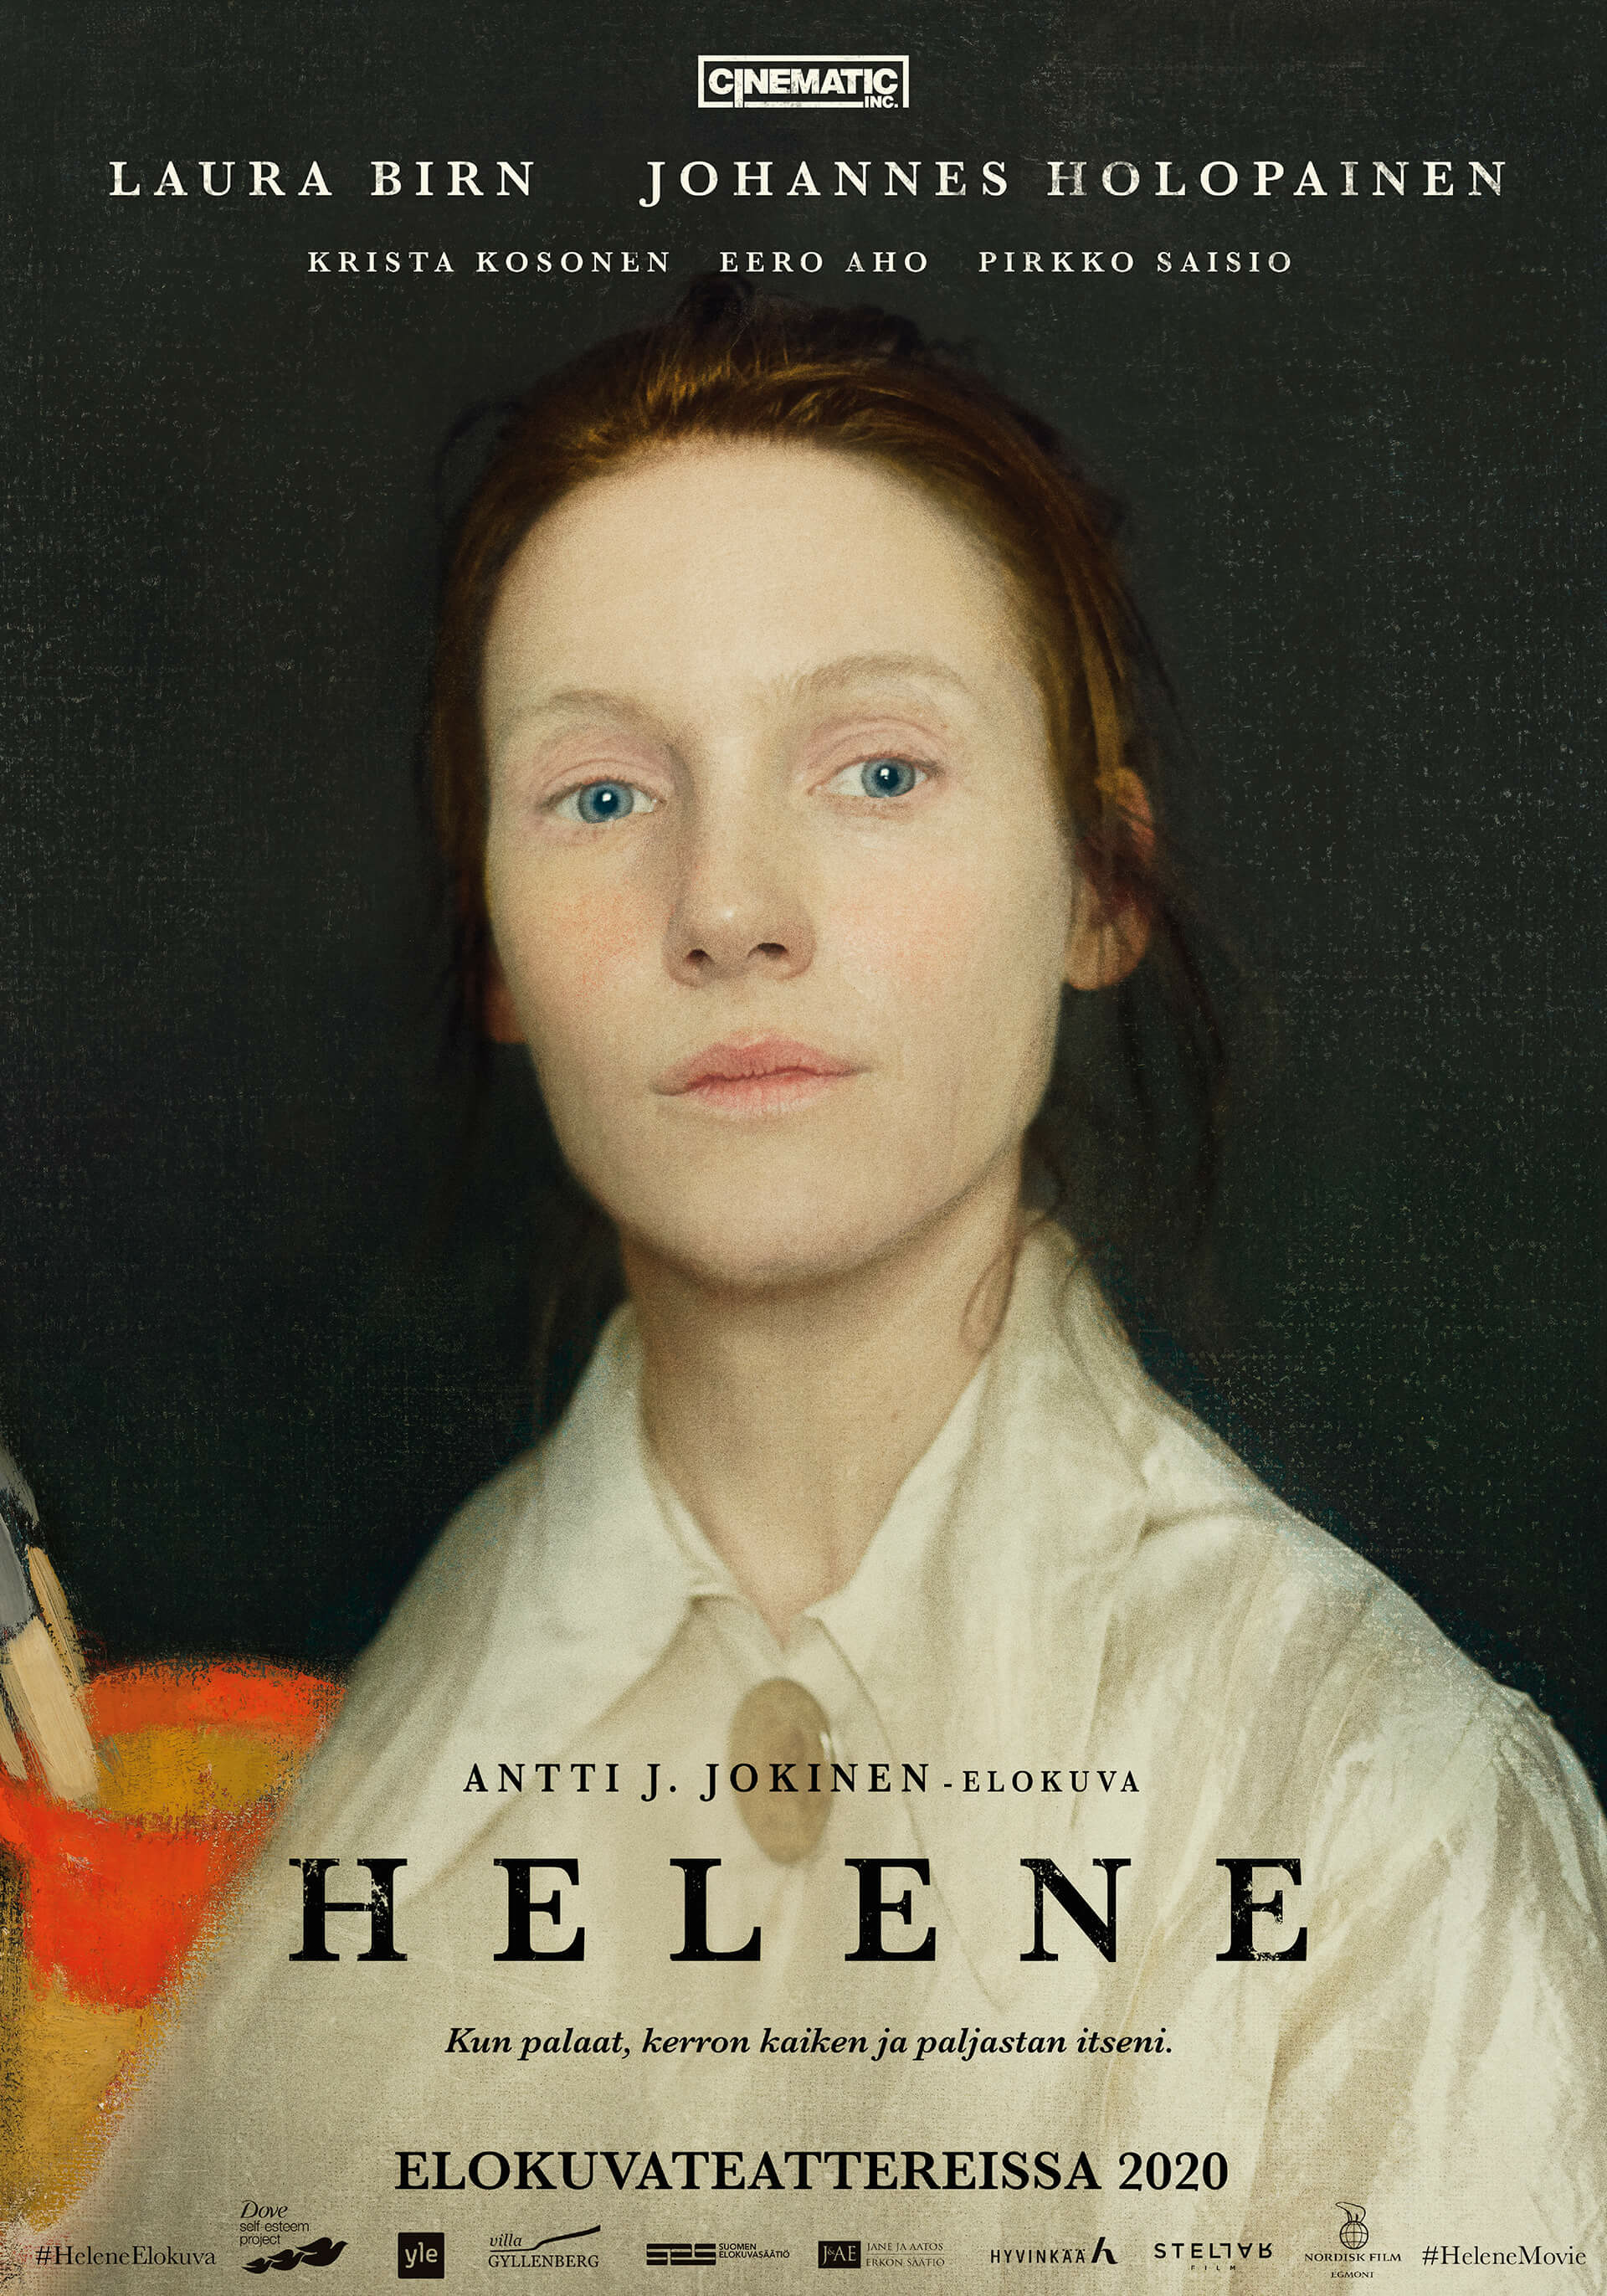 Mega Sized Movie Poster Image for Helene 